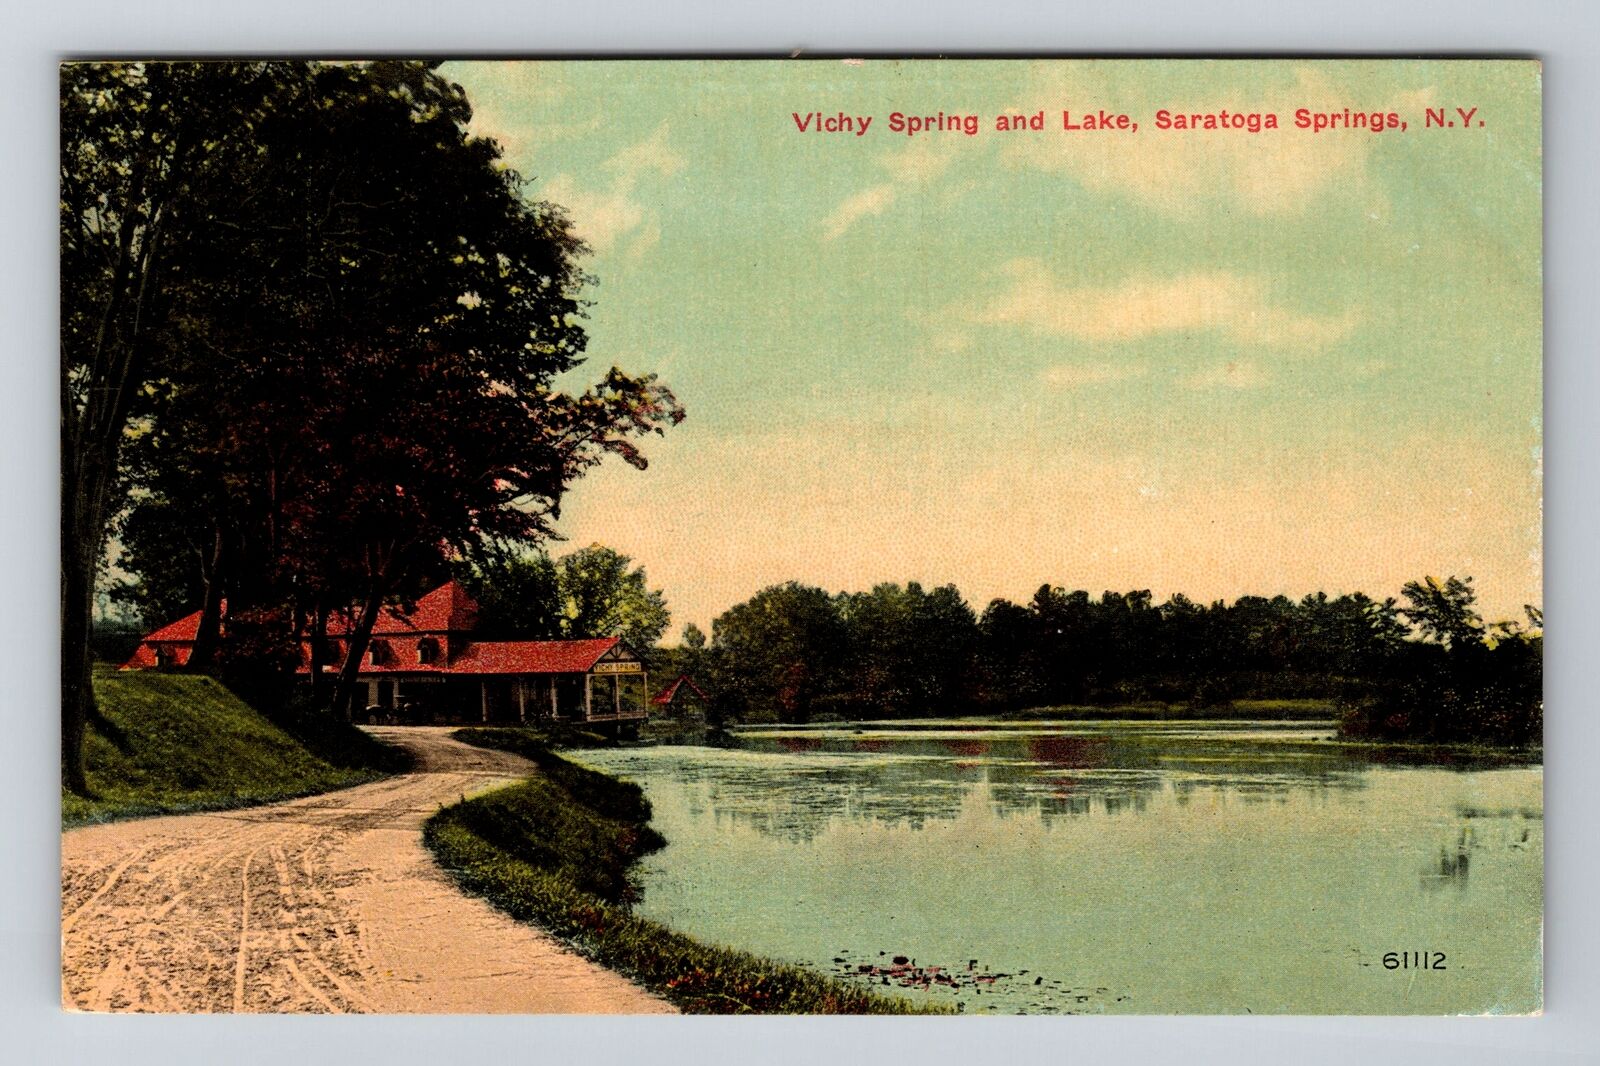 Sarasota Springs NY-New York, Vichy Spring and Lake, Vintage Postcard